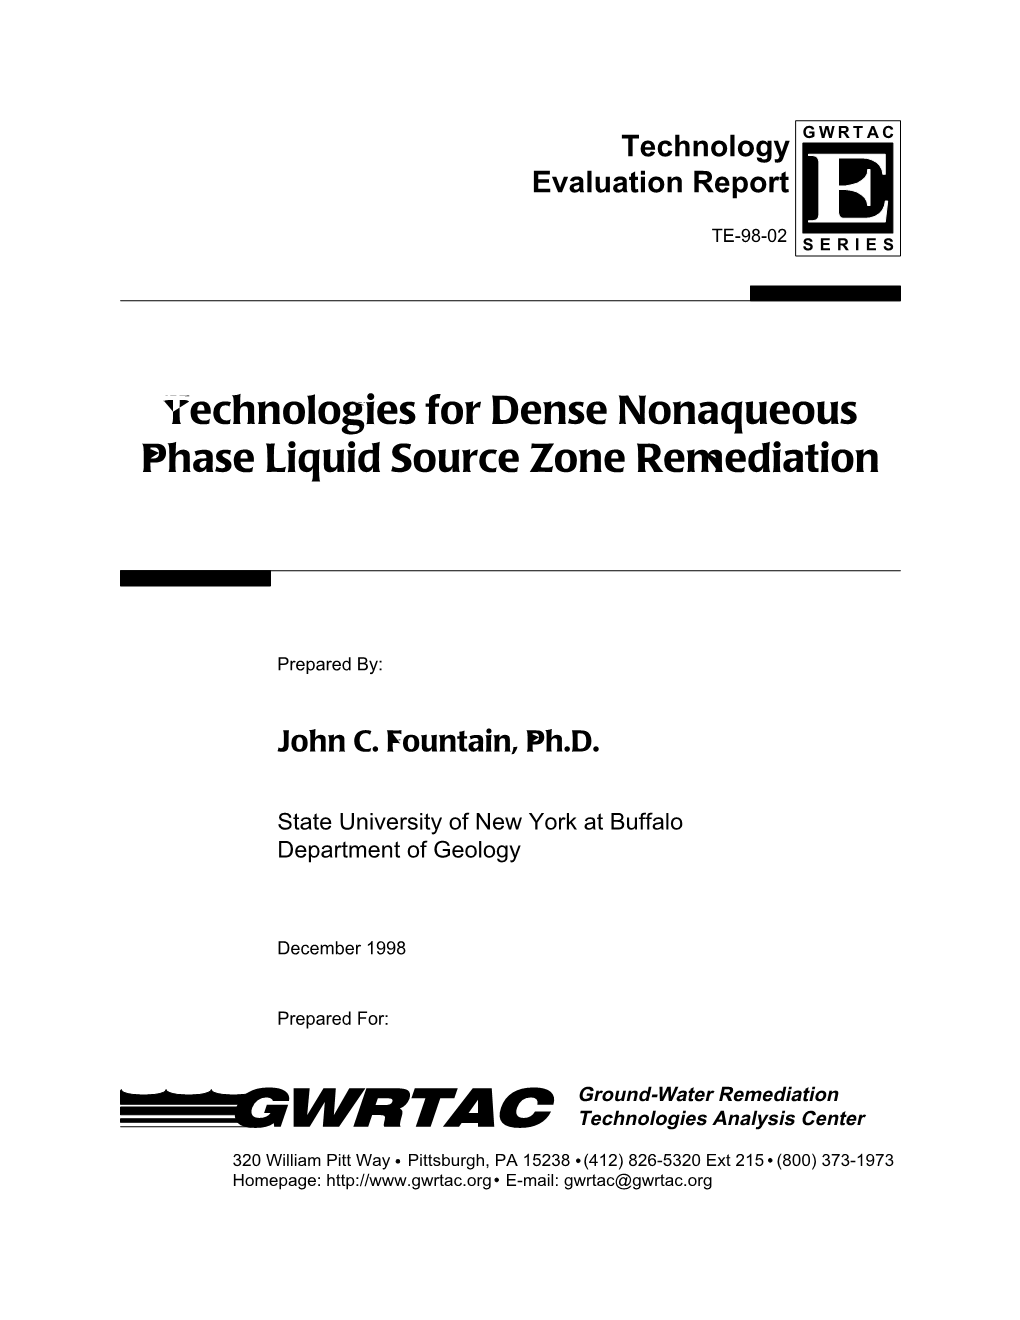 Technologies for Dense Nonaqueous Phase Liquid Source Zone Remediation